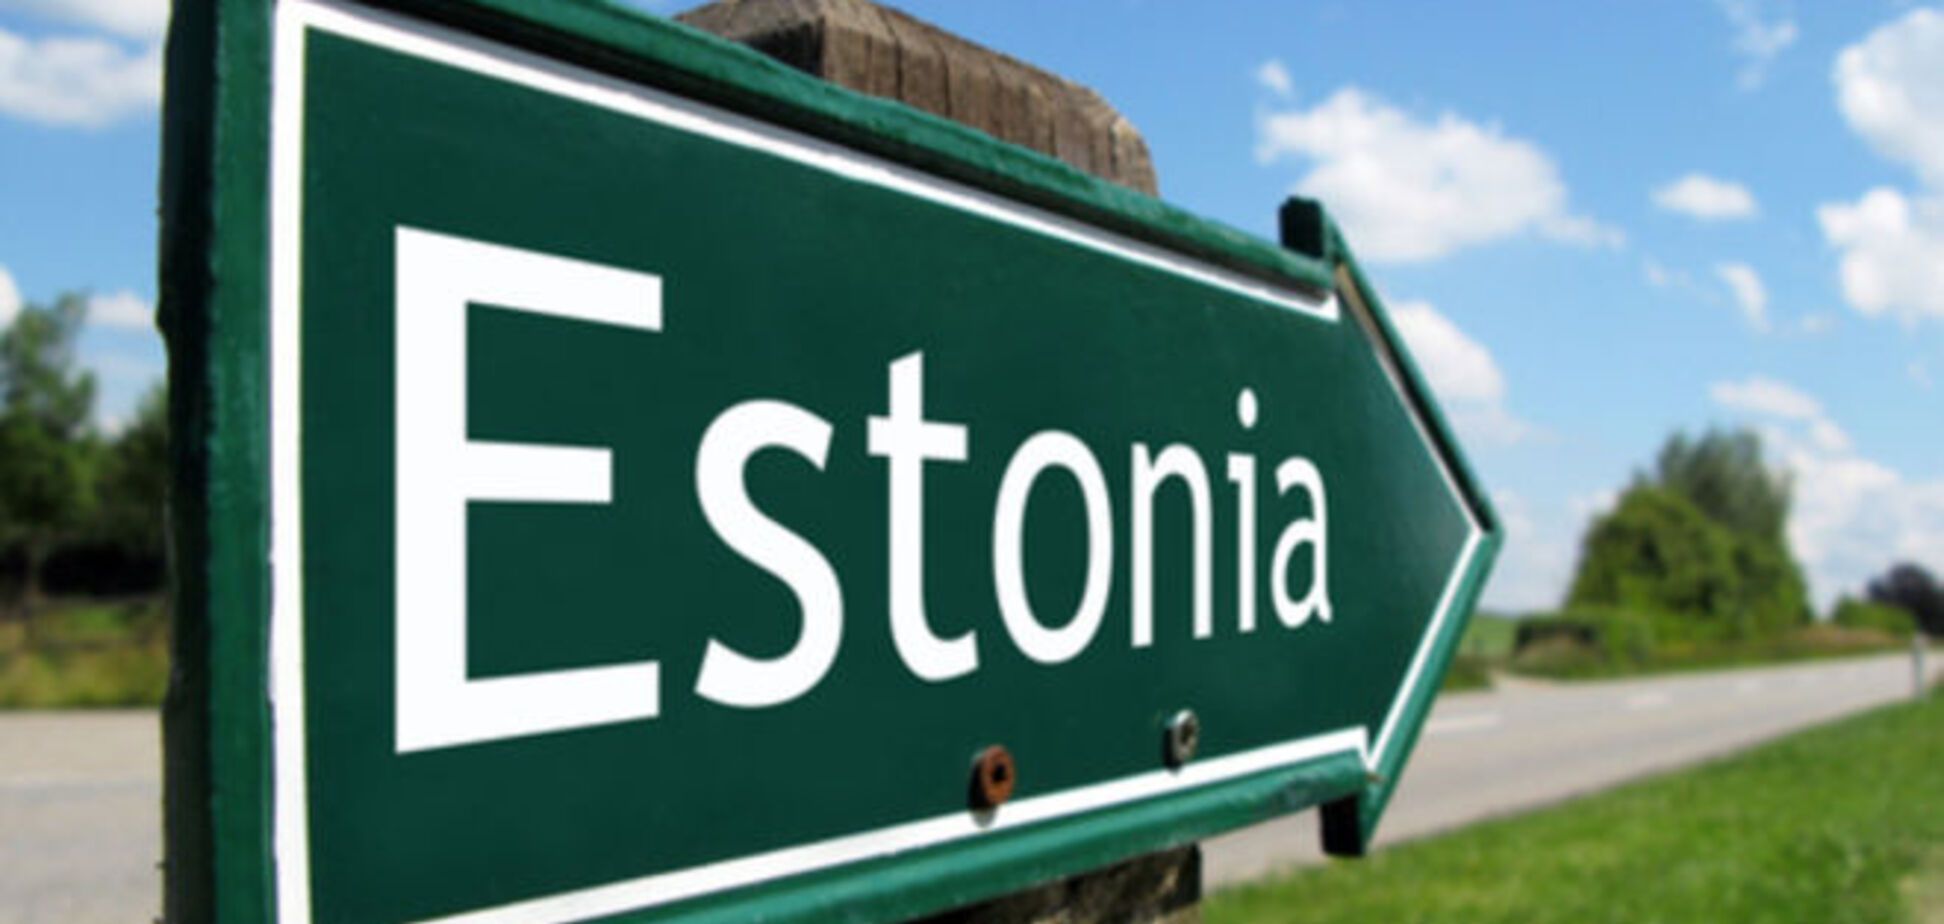 Эстония привлекает инвестиции через онлайн гражданство